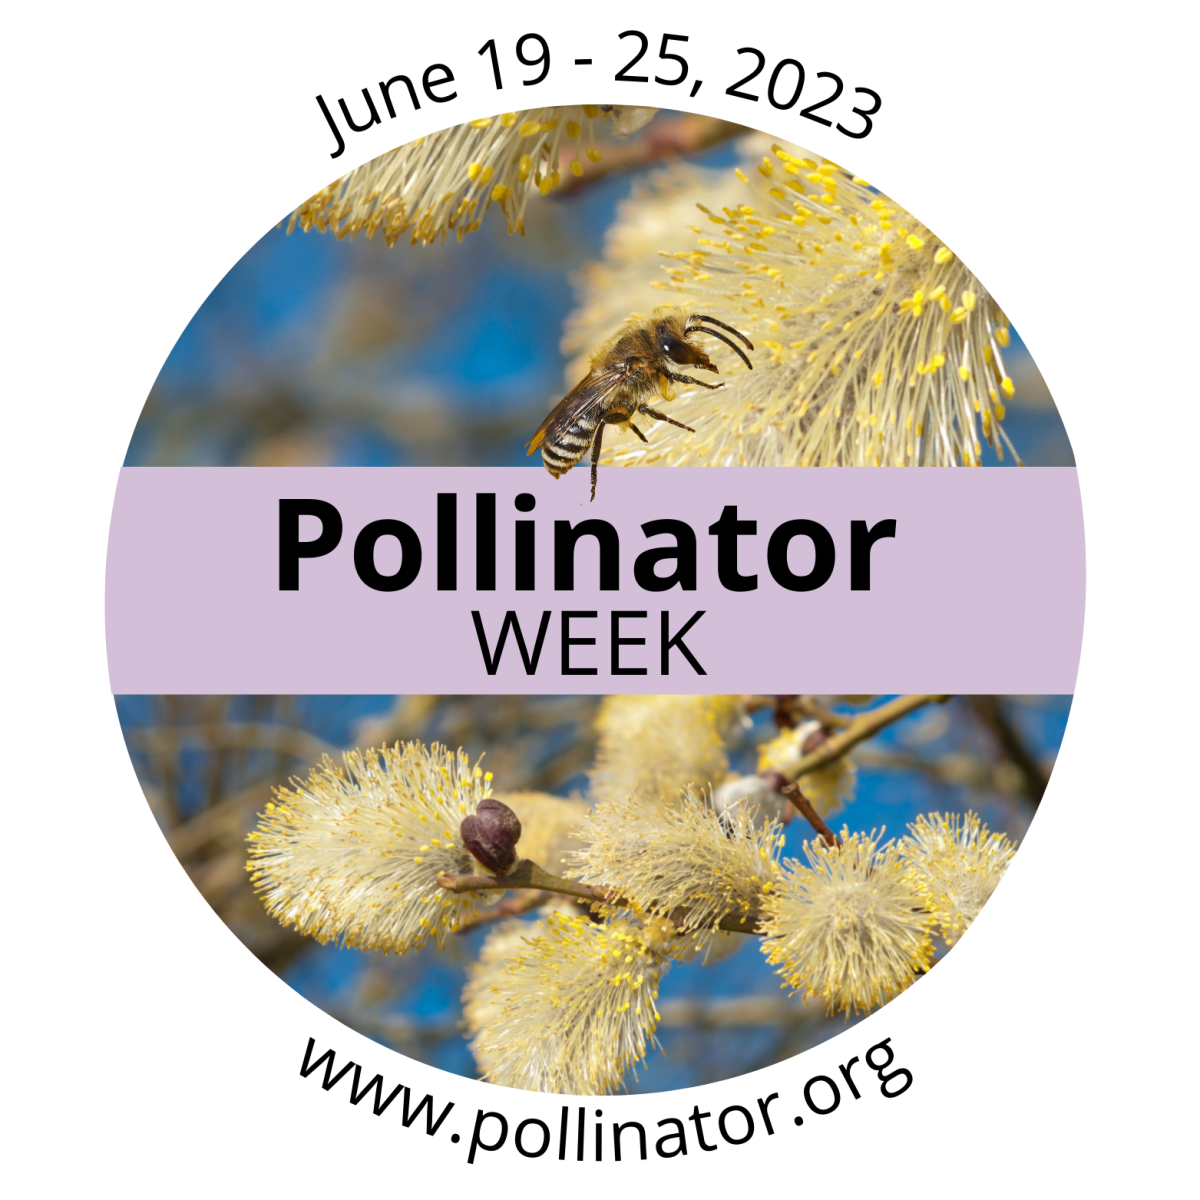 Pollinator week June 19-25, 2023